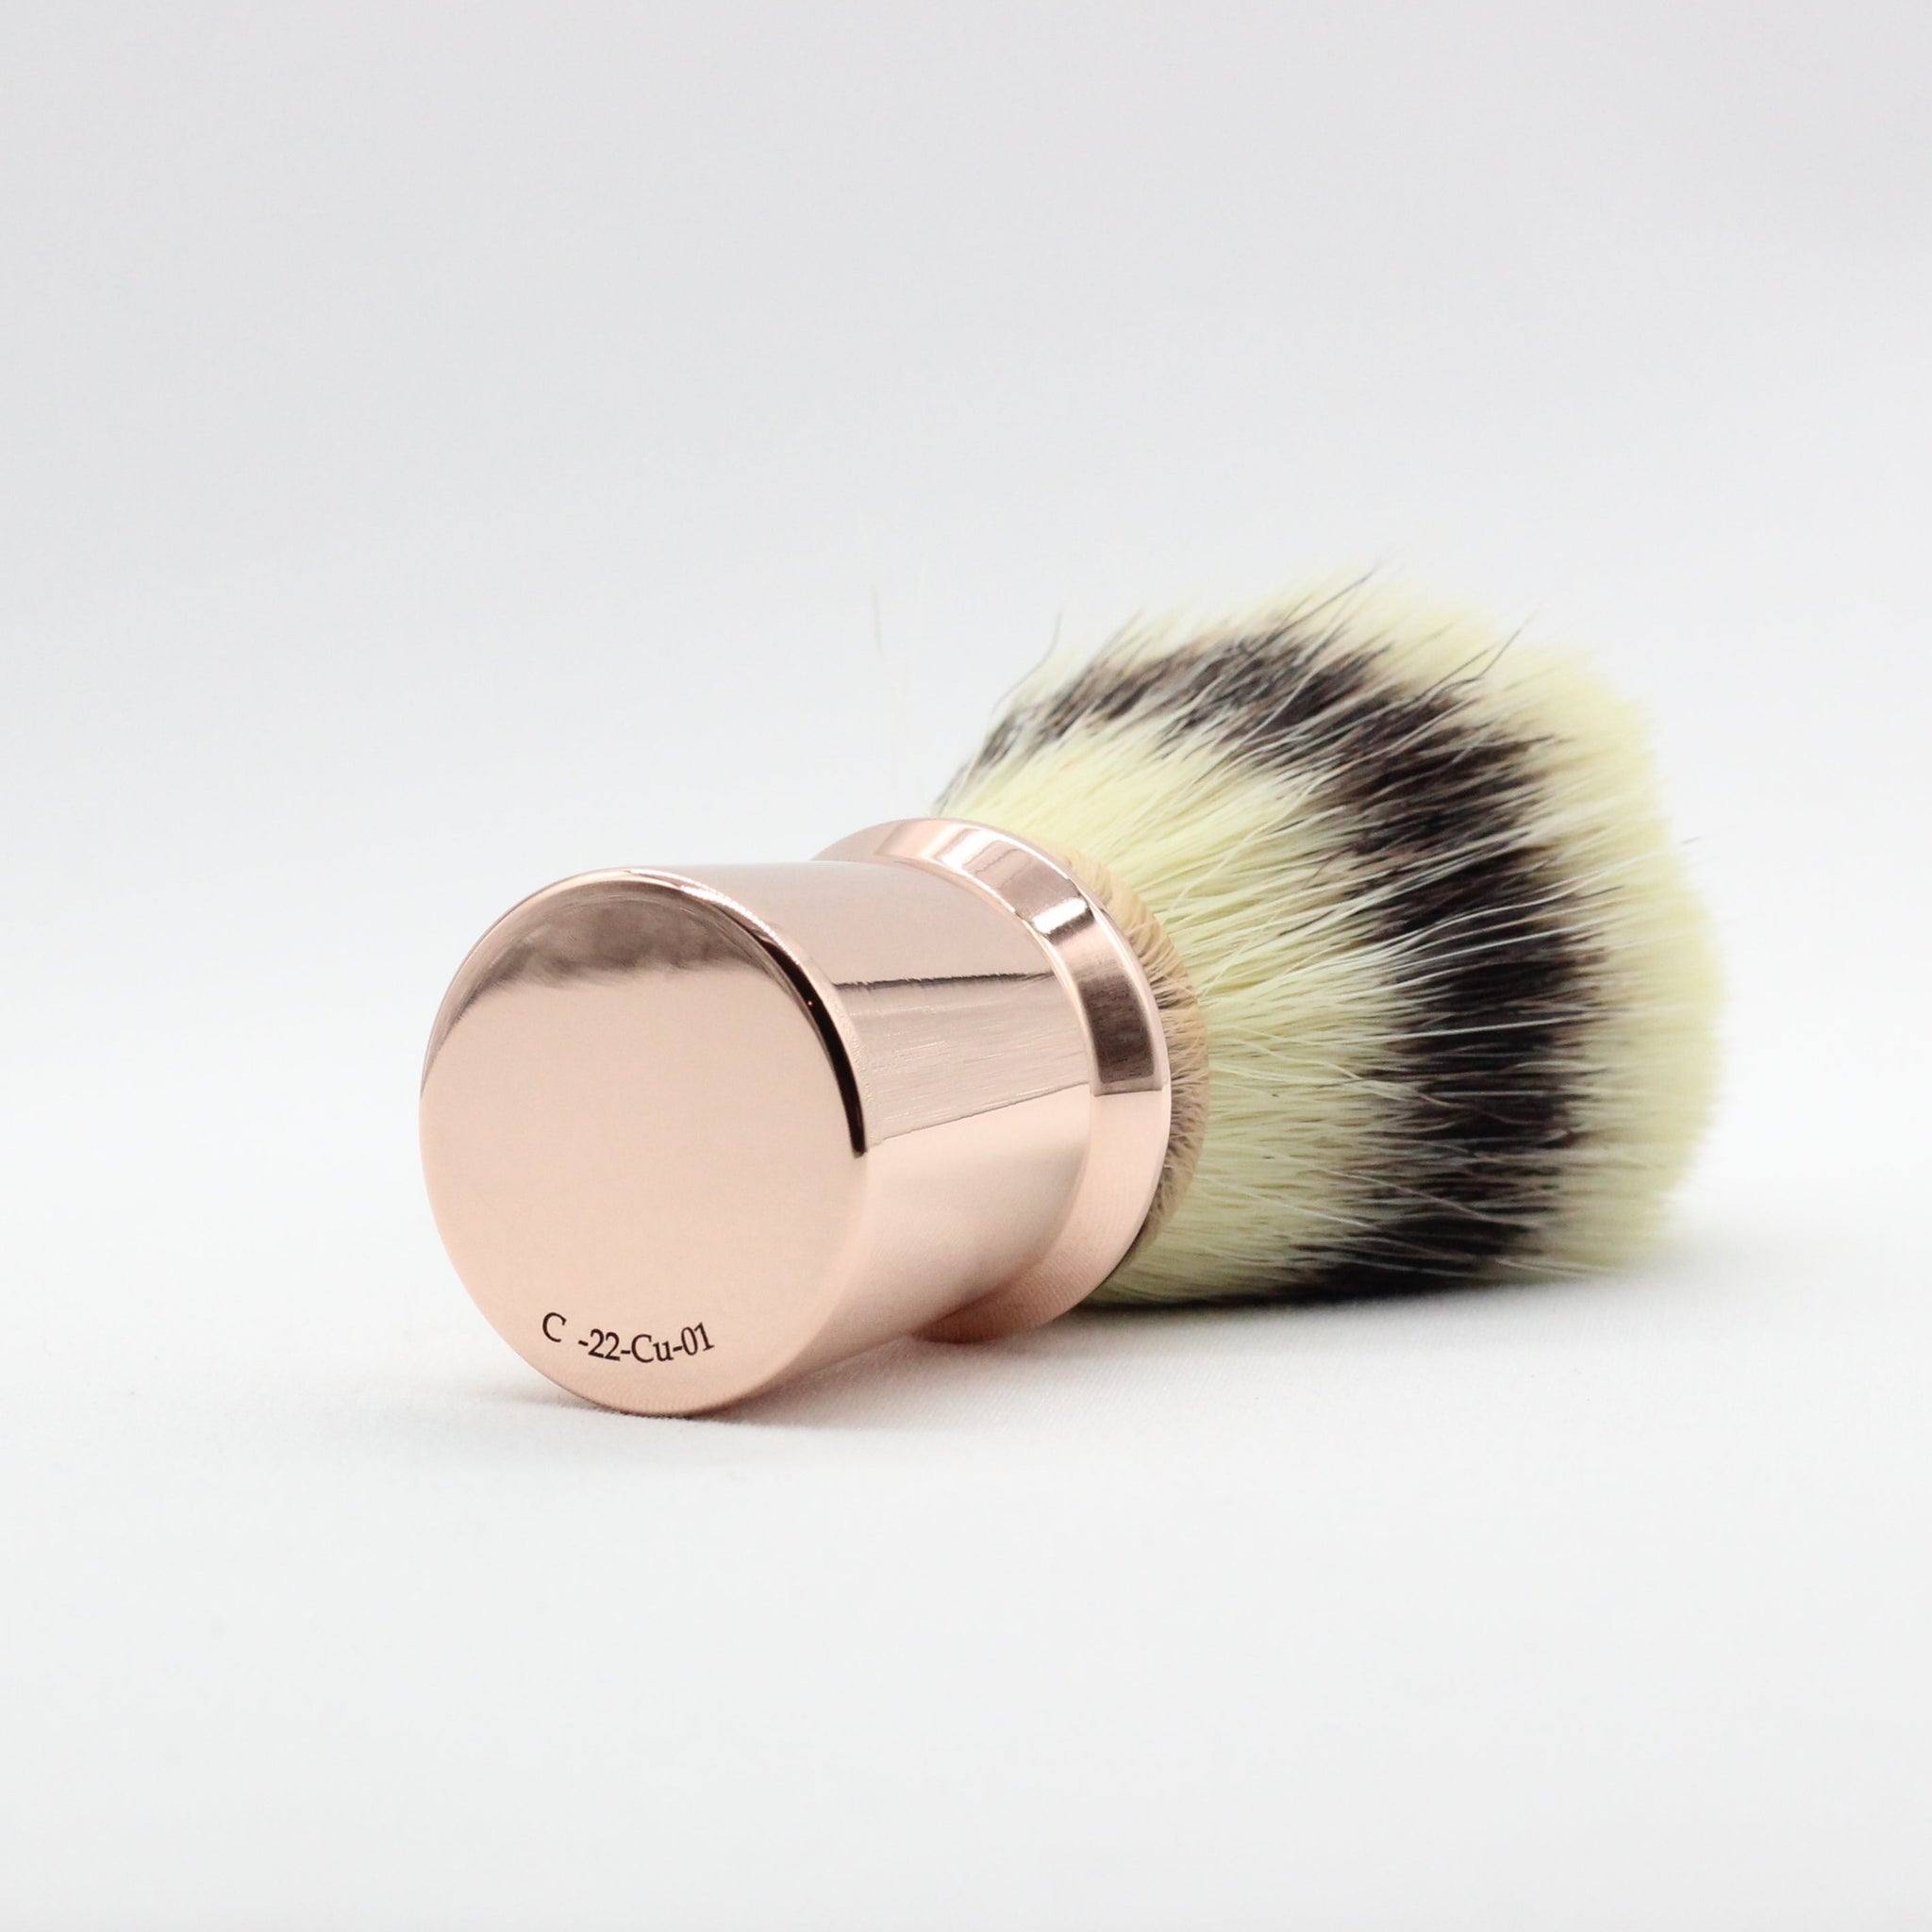 Copper shaving brush with unique serial number